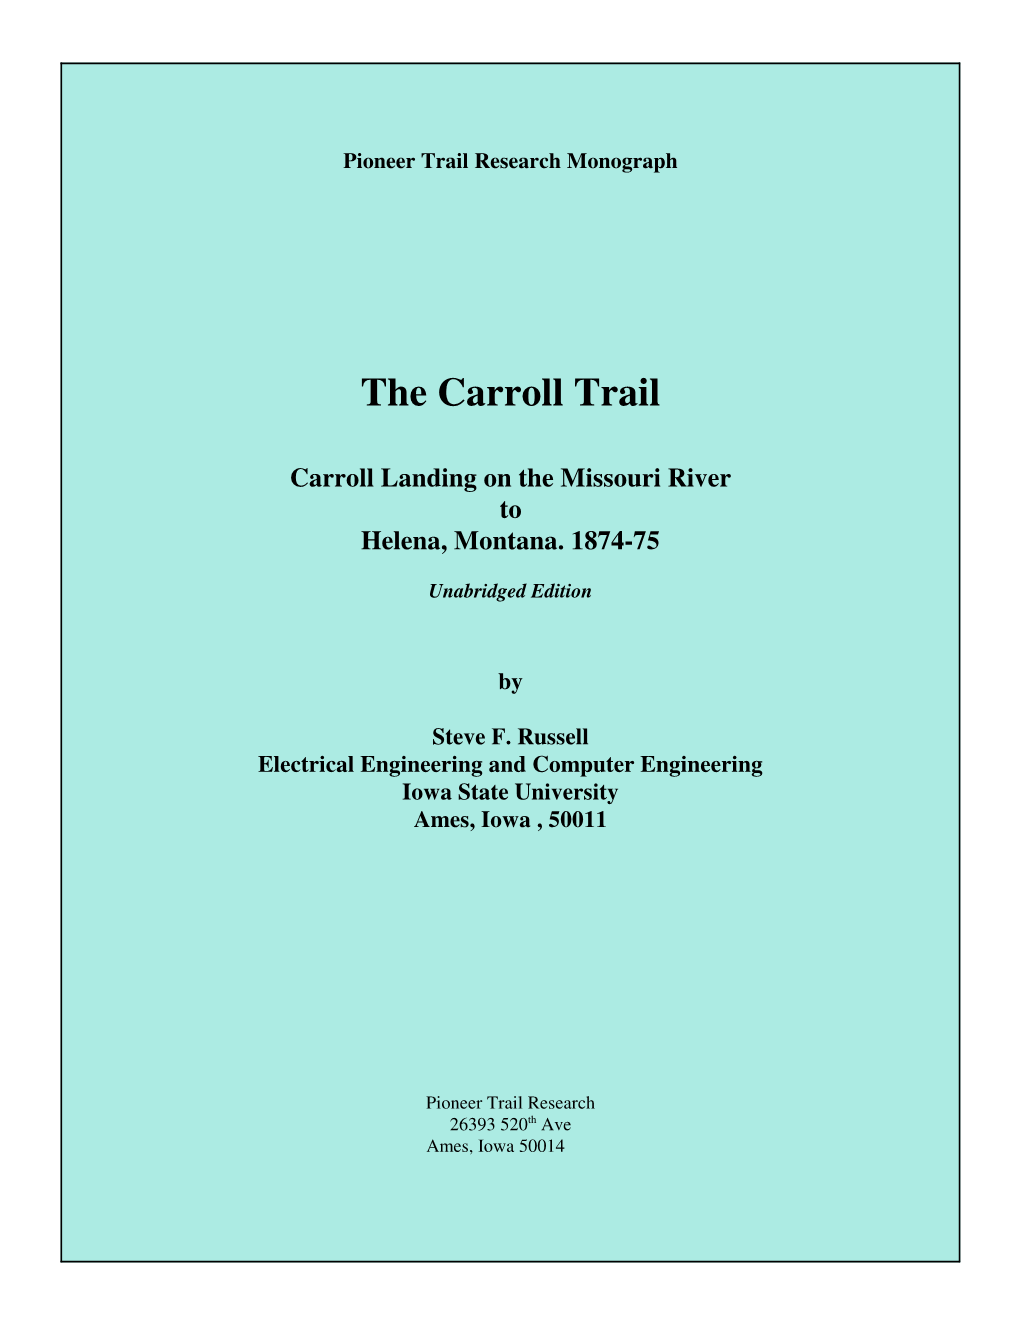 The Carroll Trail